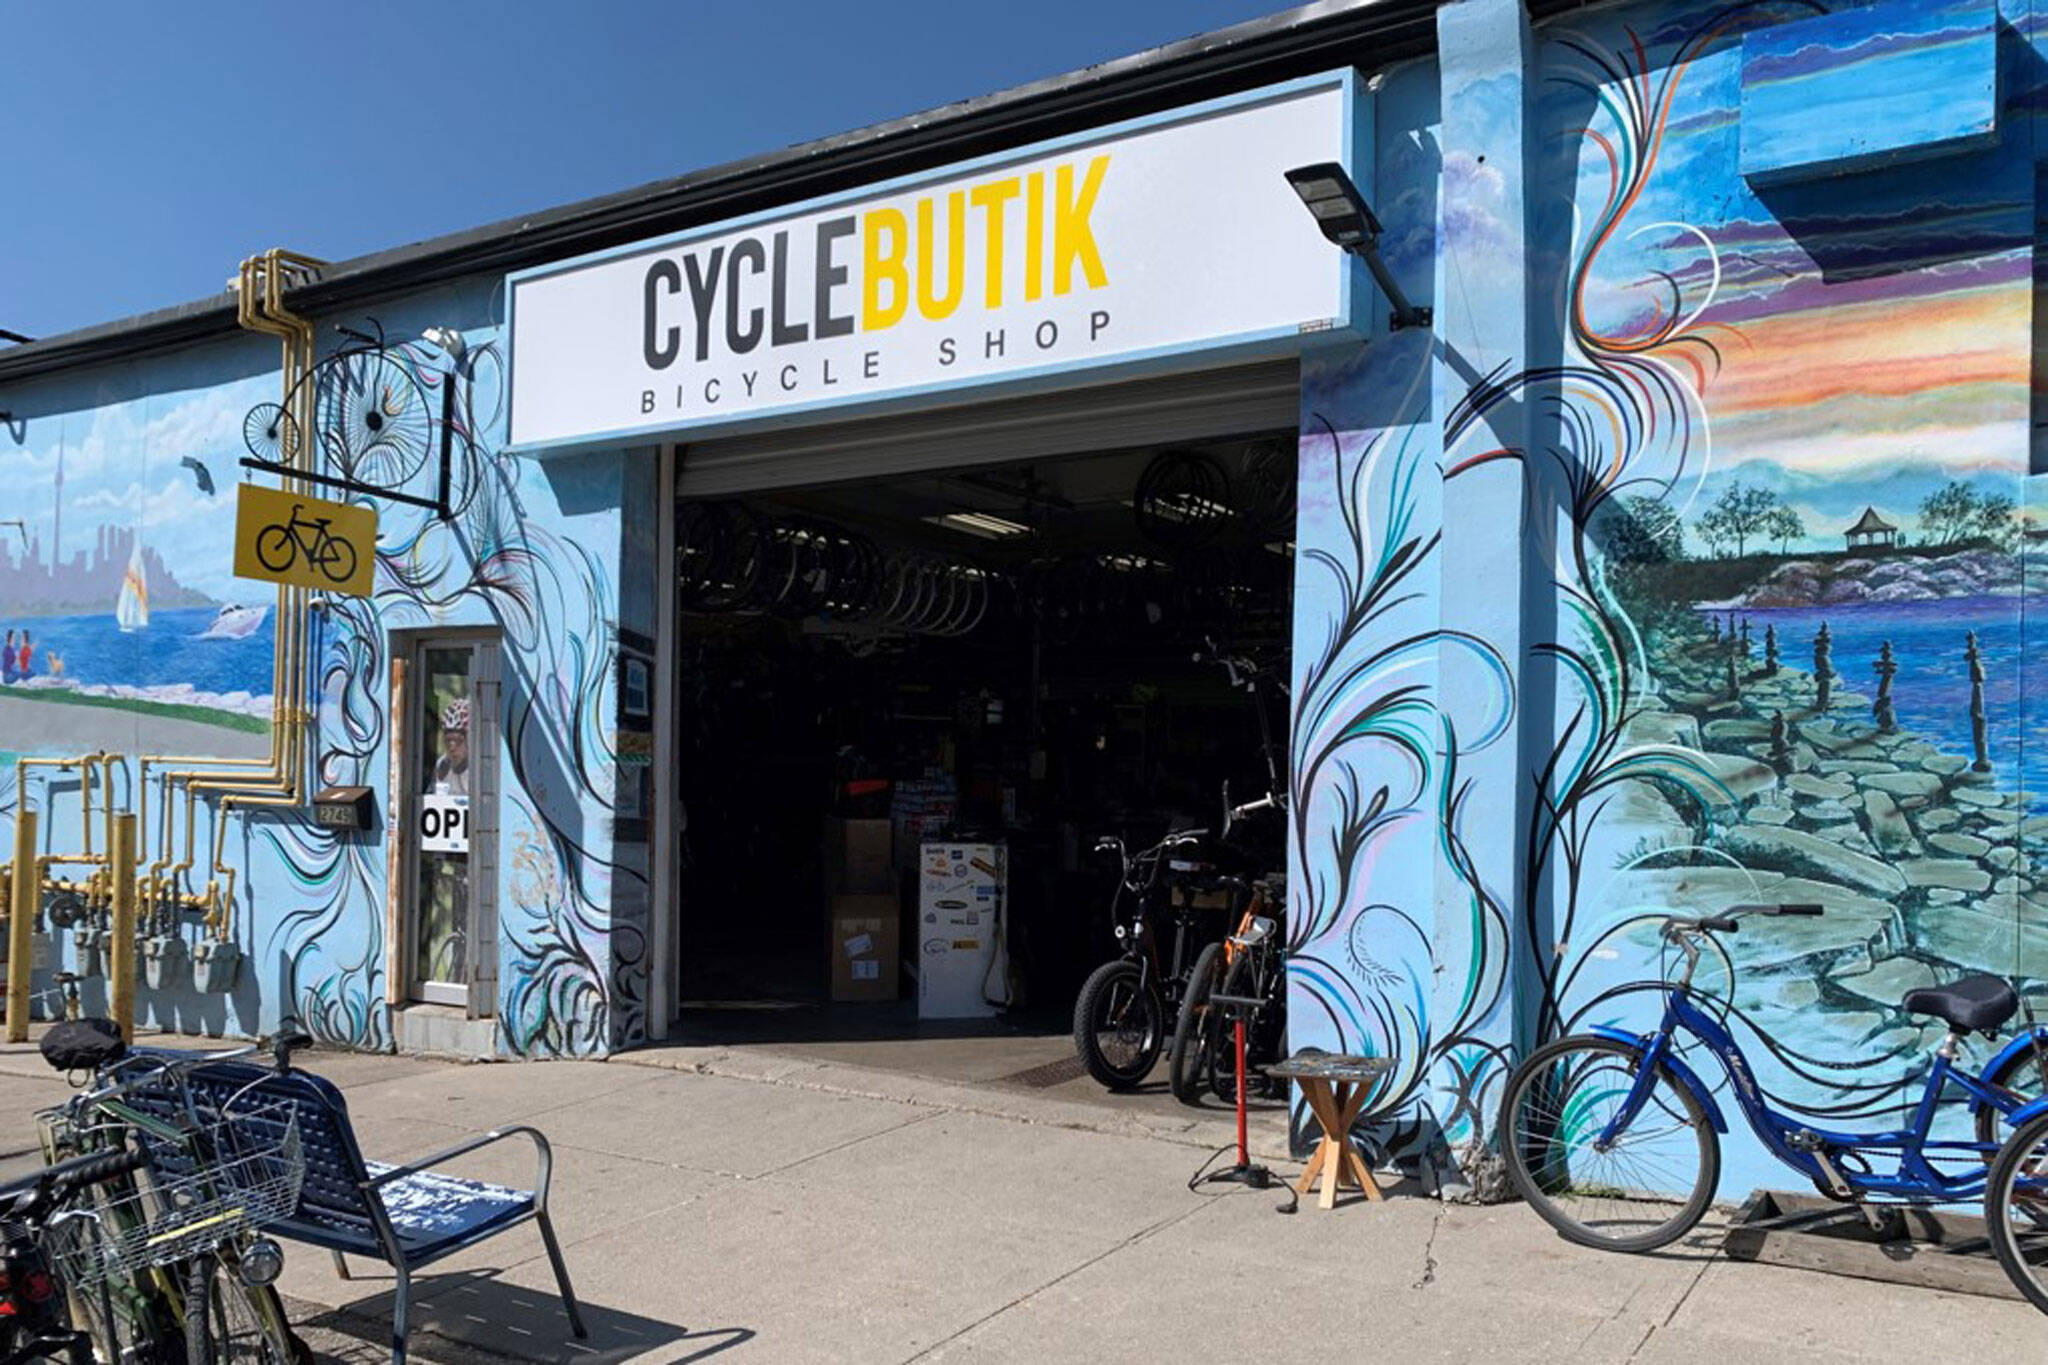 Cycle Butik Toronto